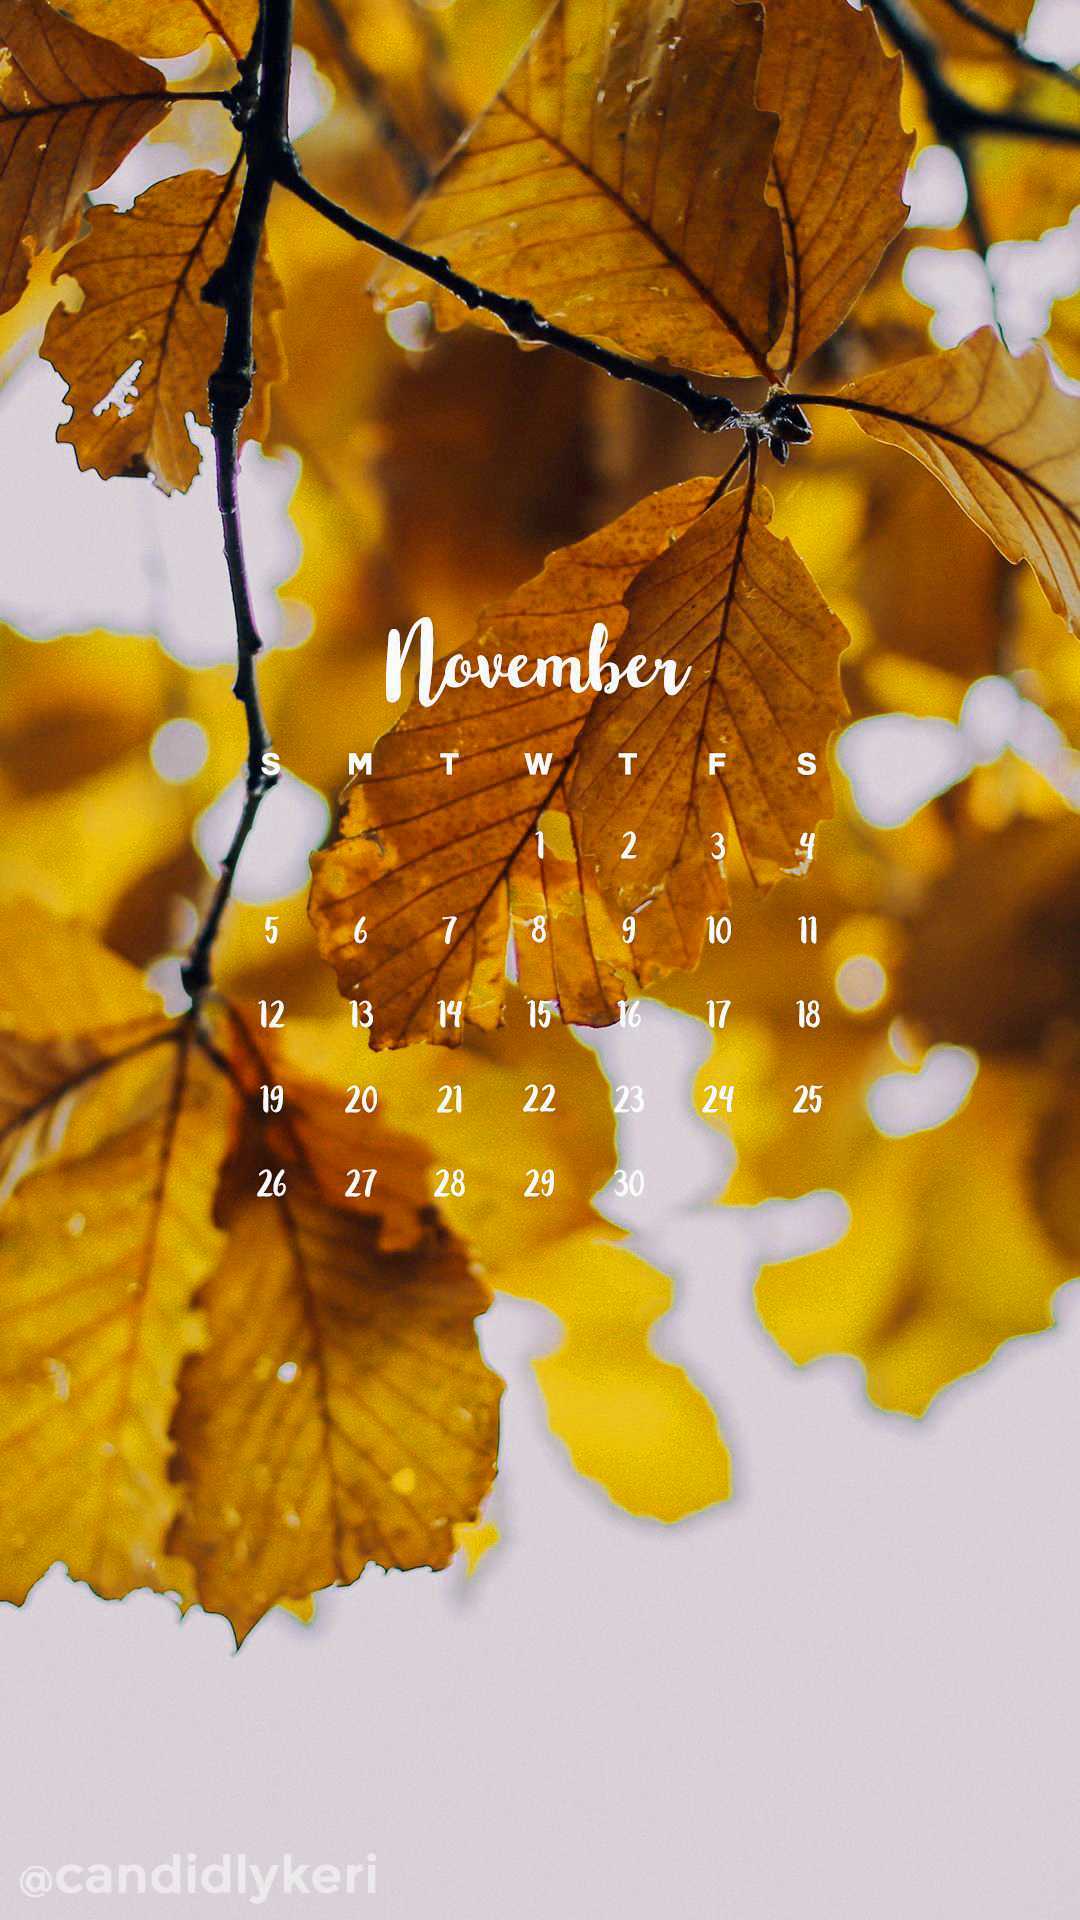 November Wallpaper - KoLPaPer - Awesome Free HD Wallpapers